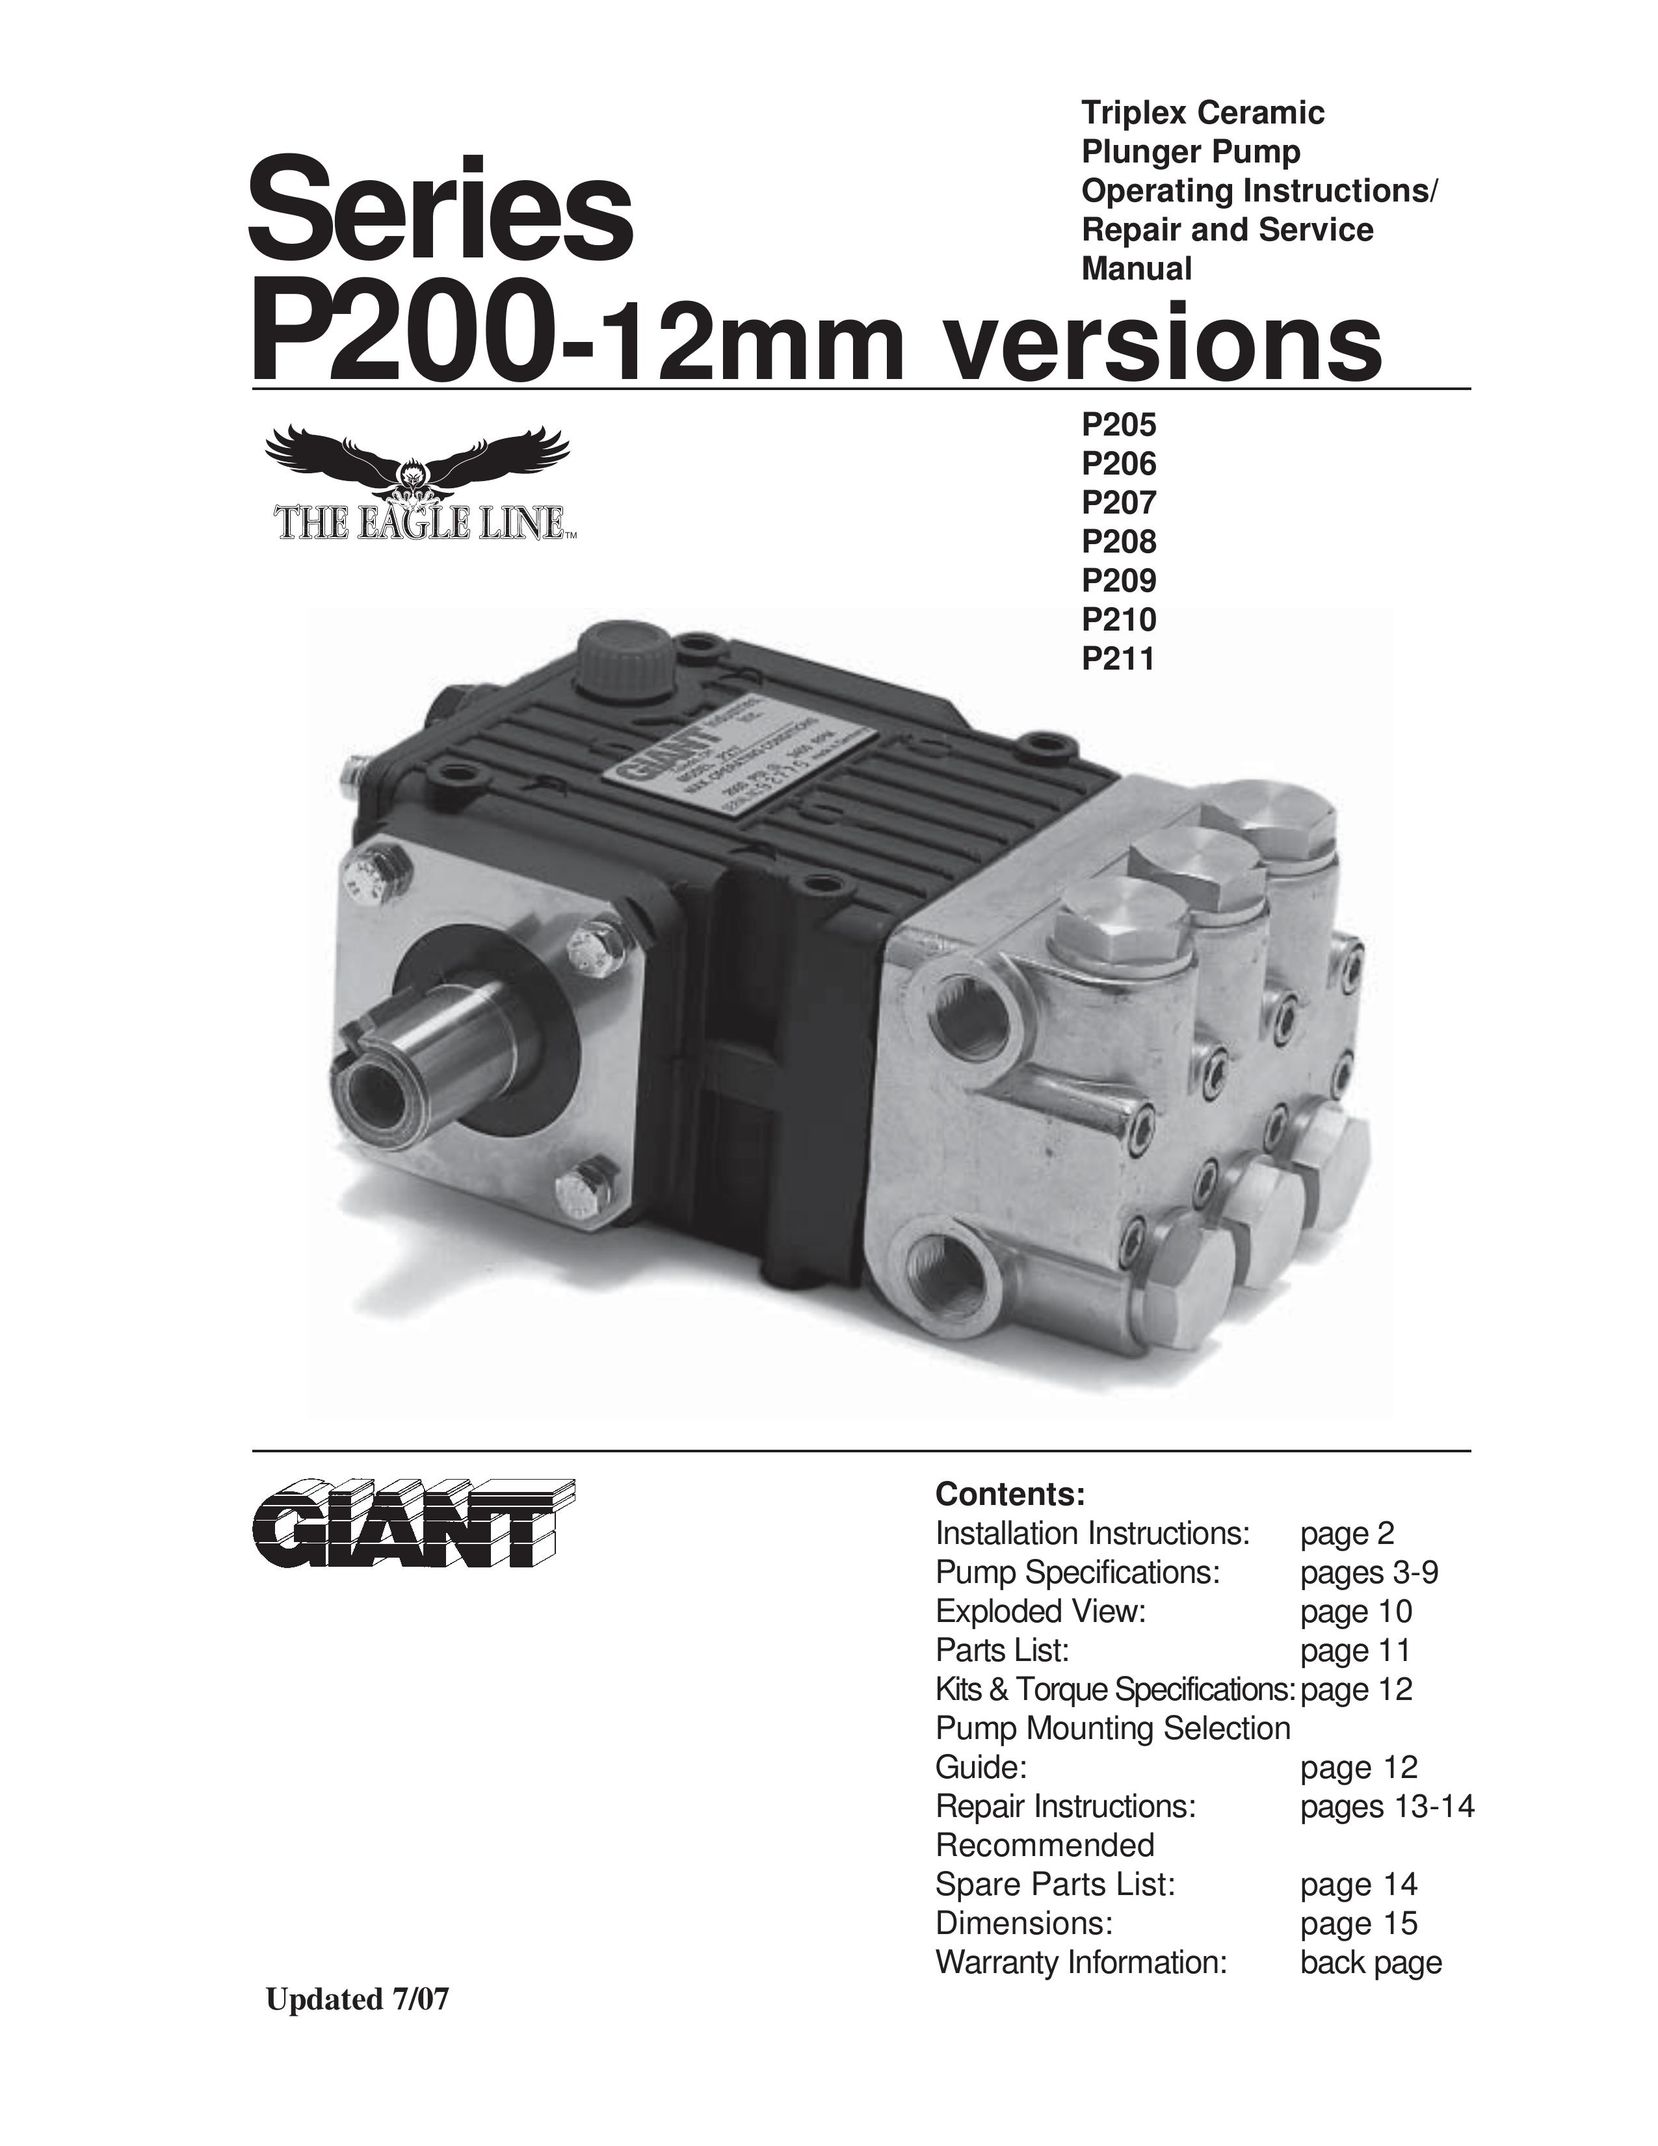 Giant P206 Heat Pump User Manual